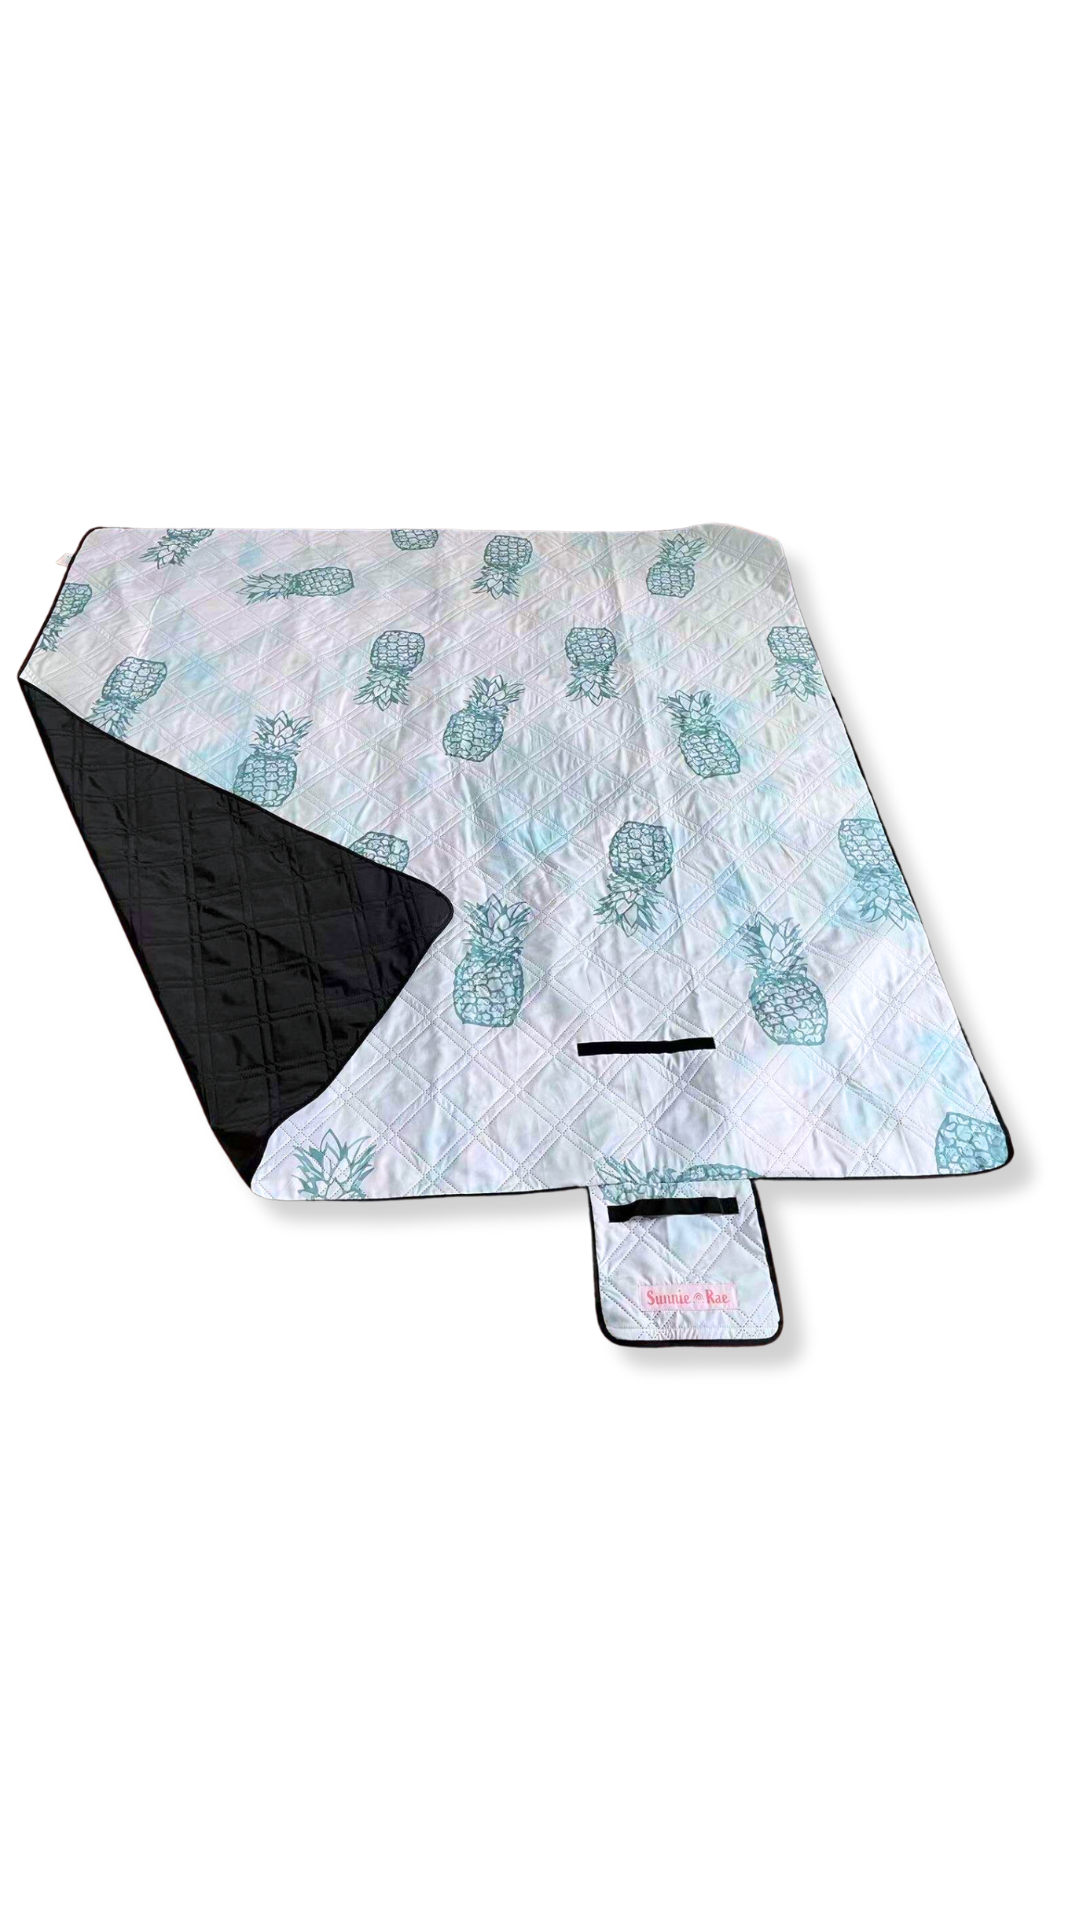 Waterproof Picnic Blanket | Extra Large Picnic Blanket